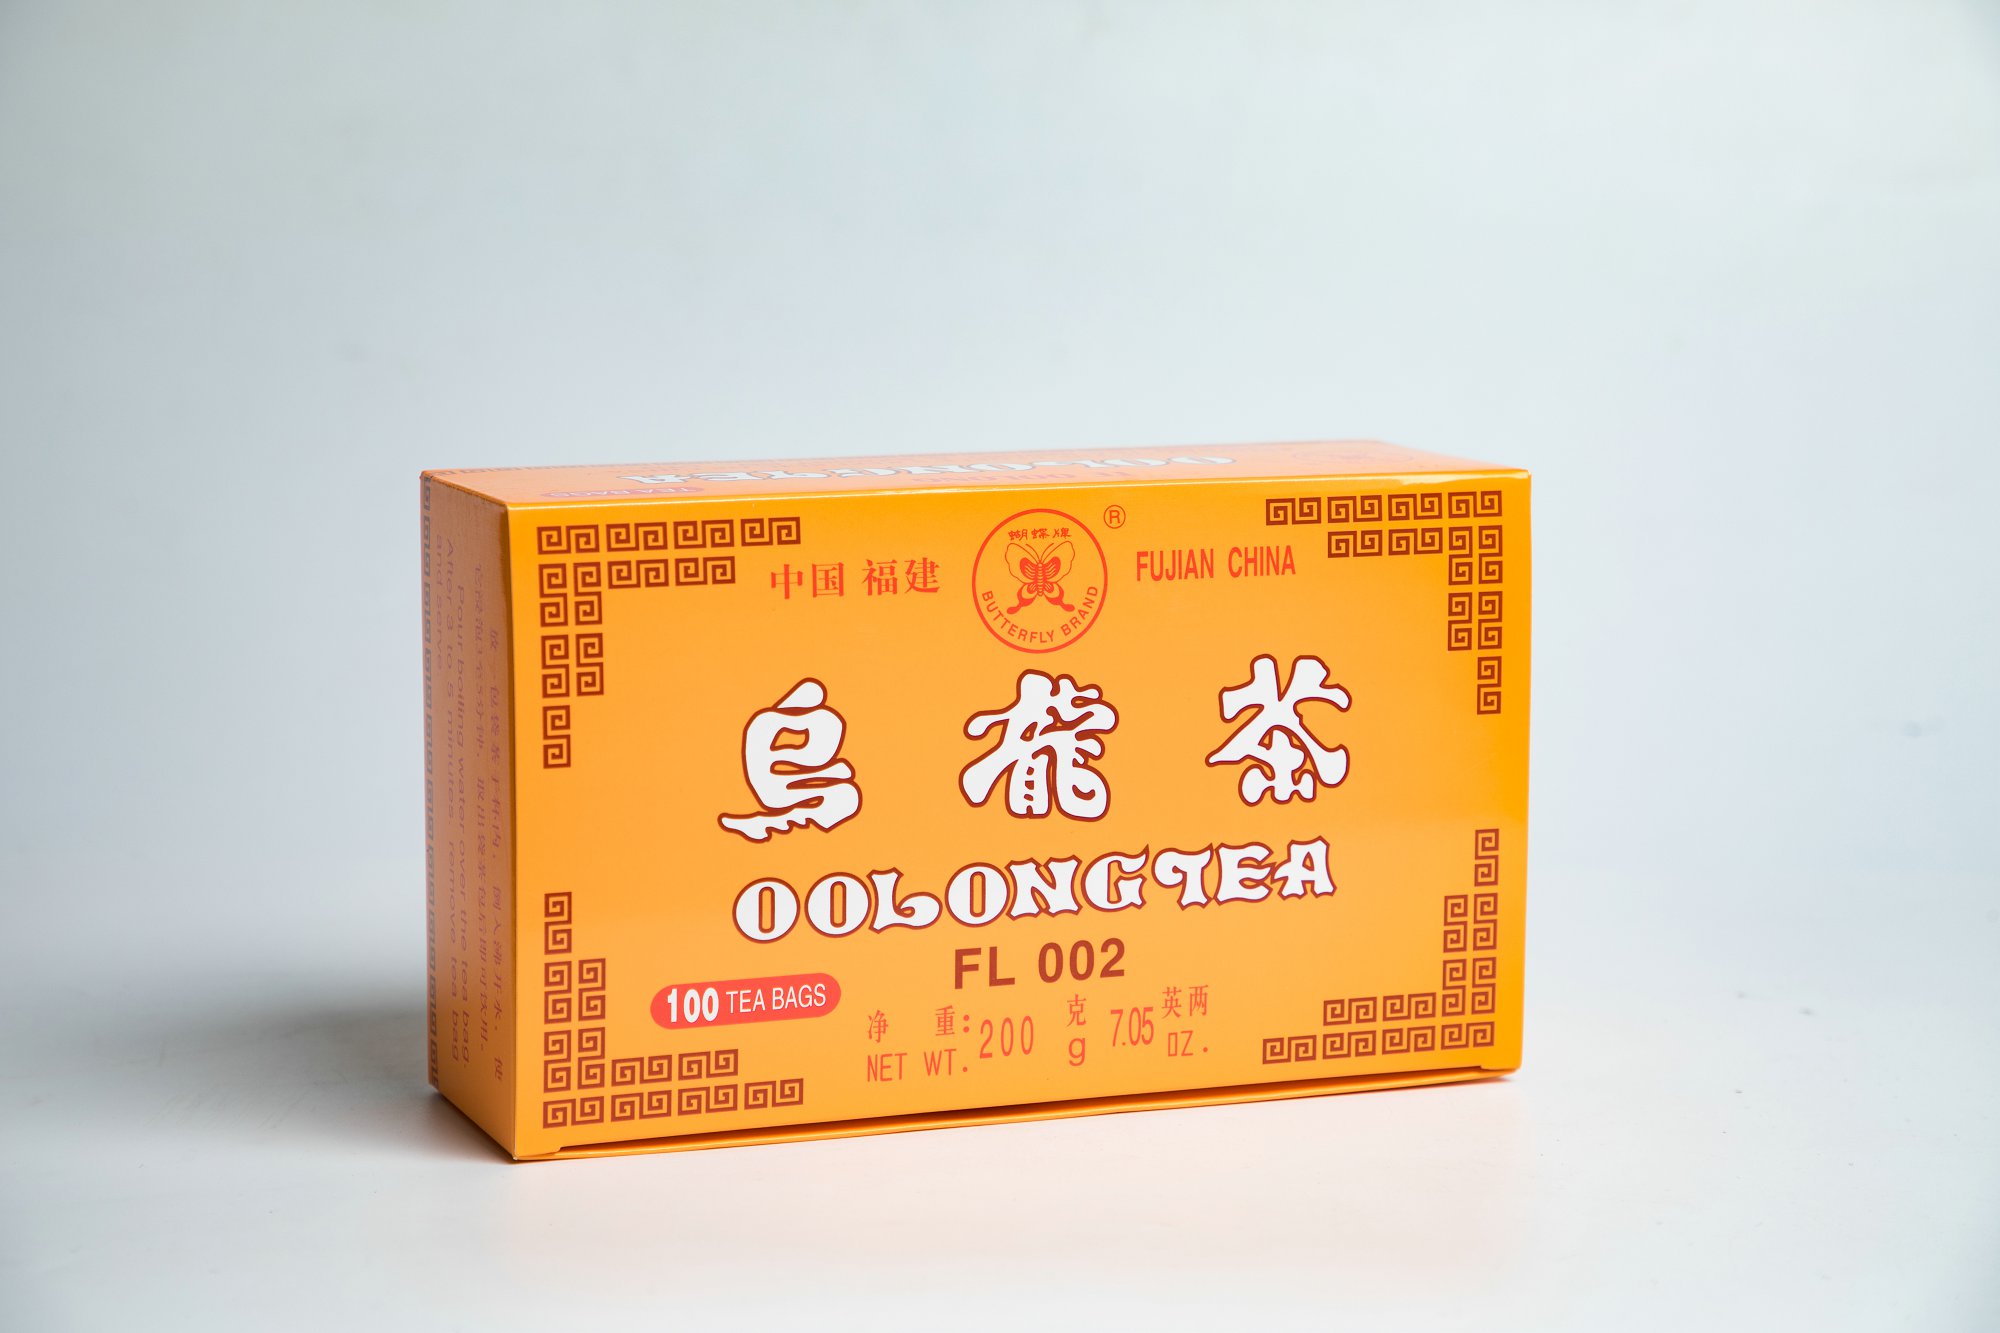 Oolong Tea Bags#FL002 2GX100BAGS